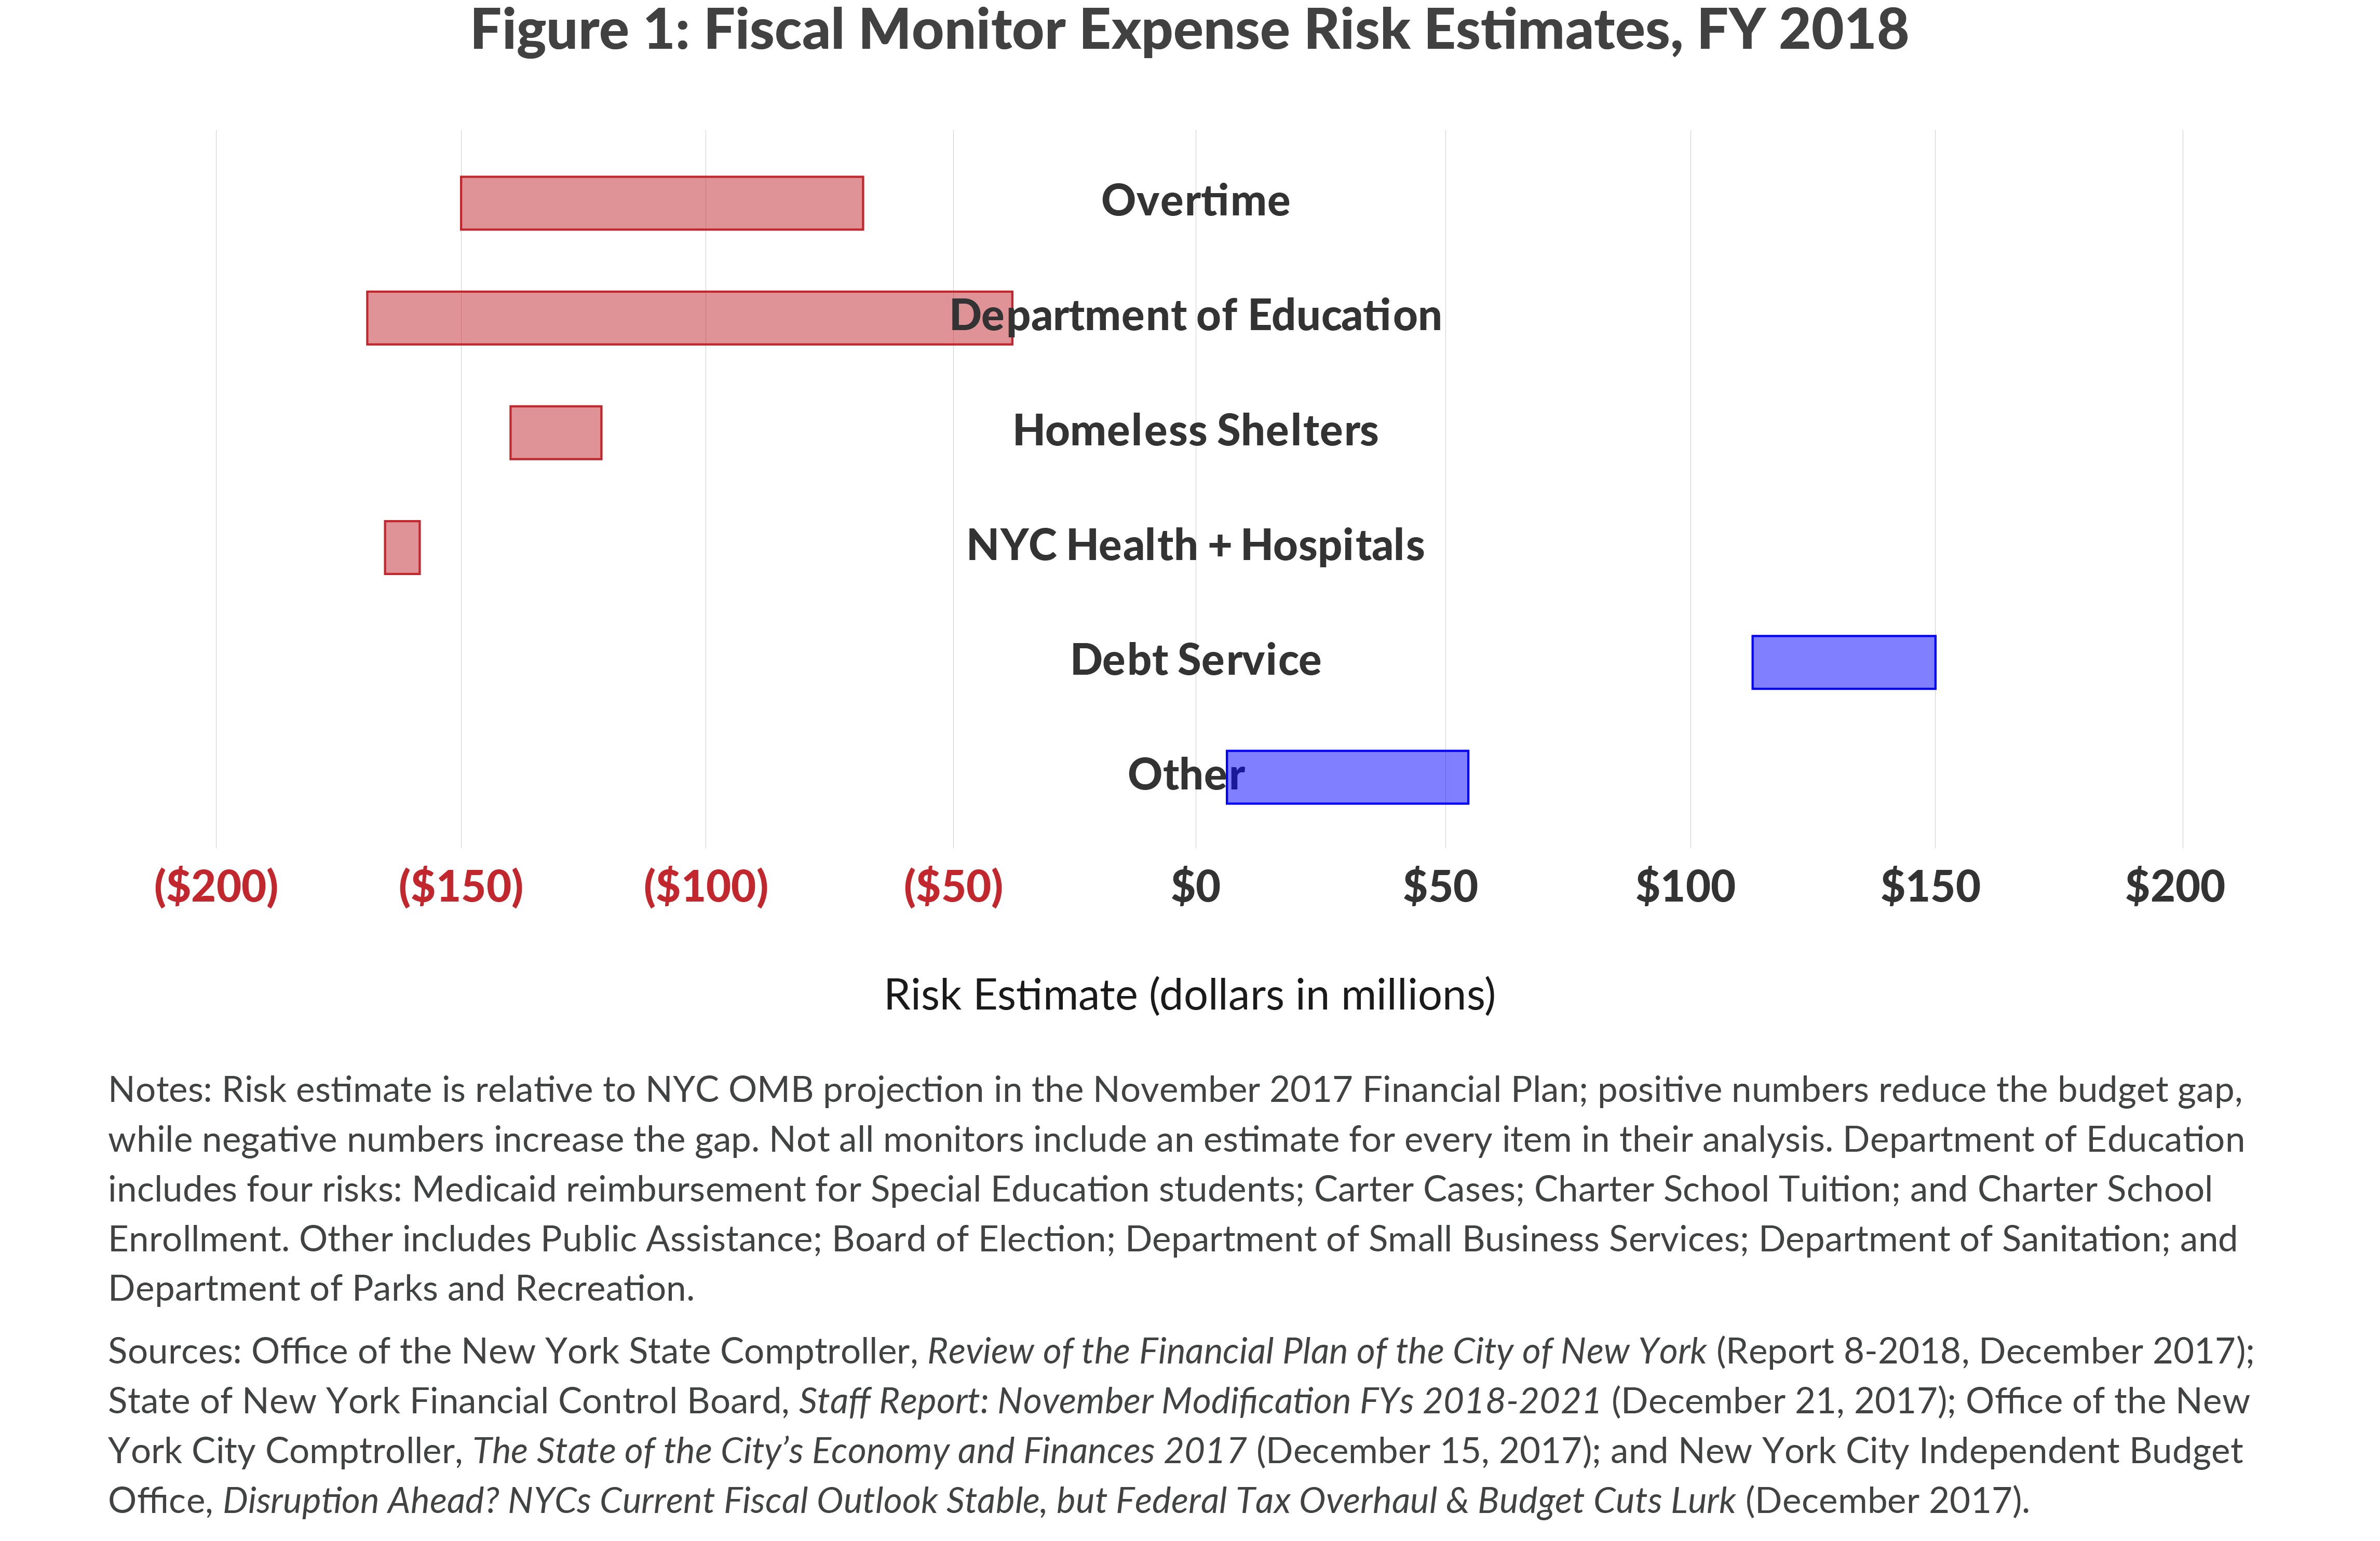 Figure 1: Fiscal Monitor Expense Risk Estimates, FY 2018